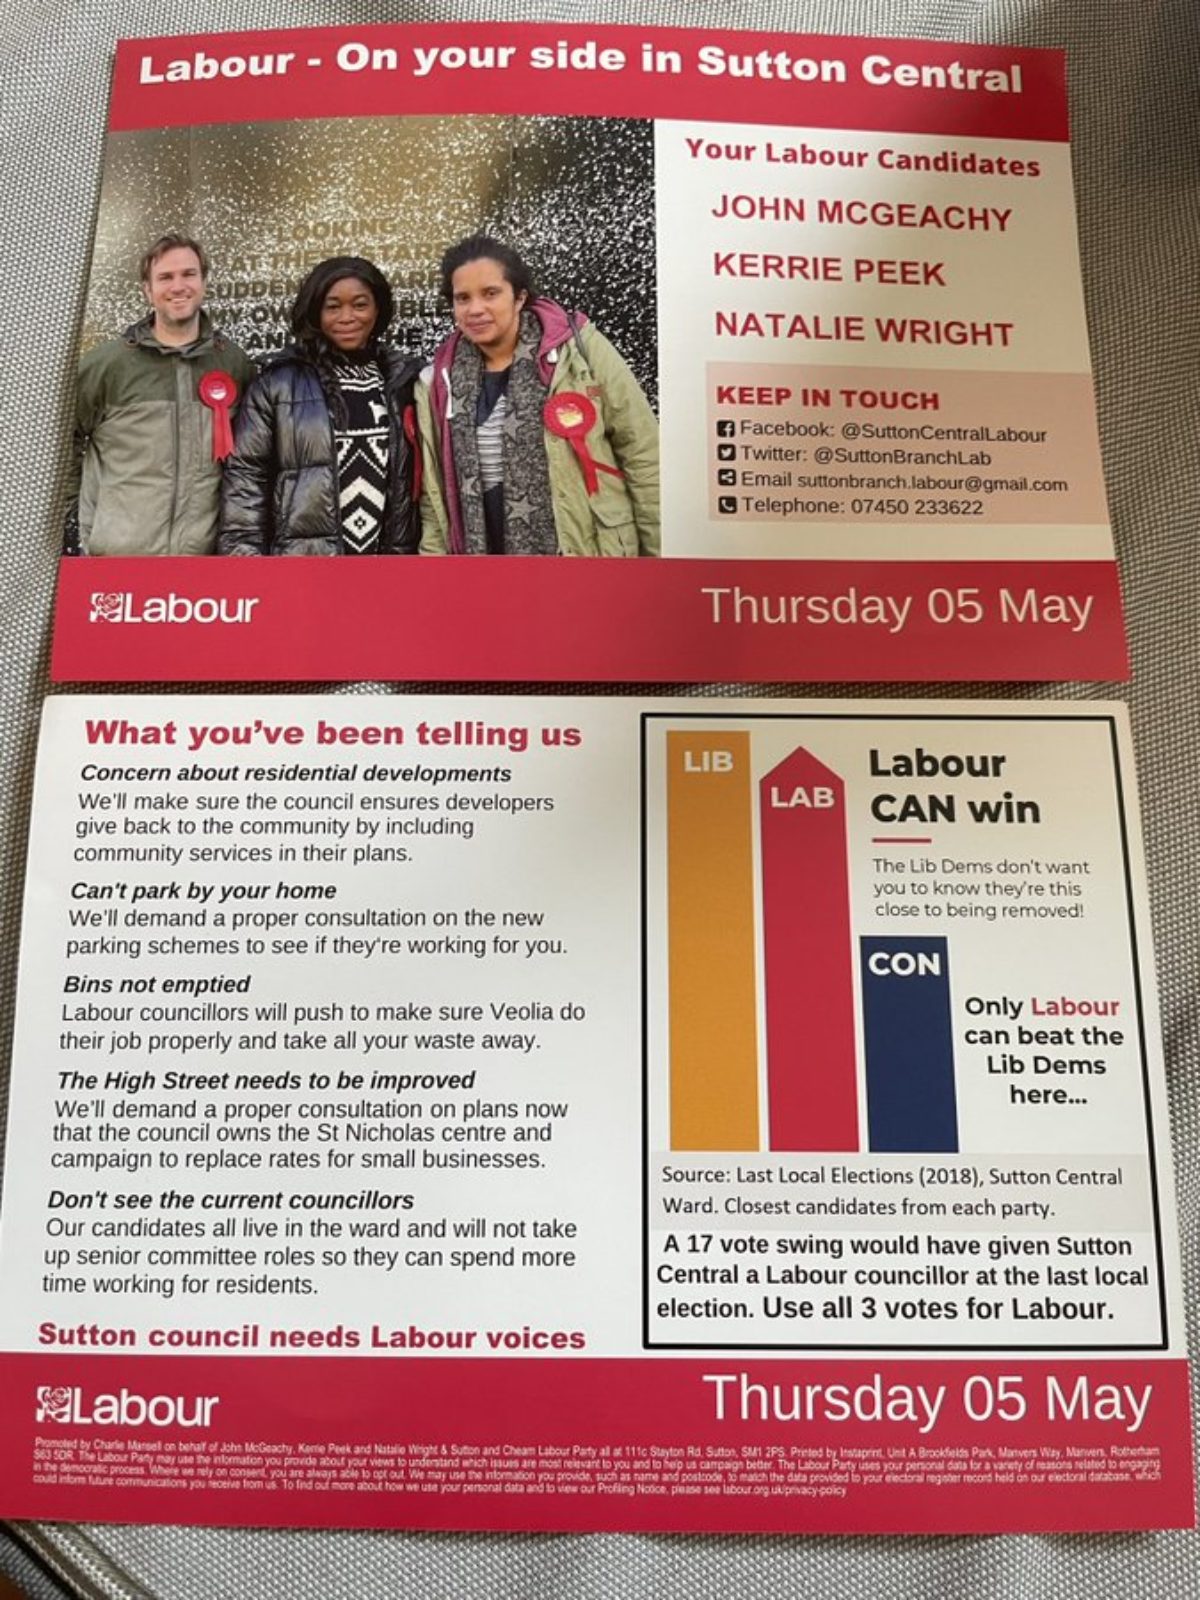 Sutton Central Ward Labour Candidates